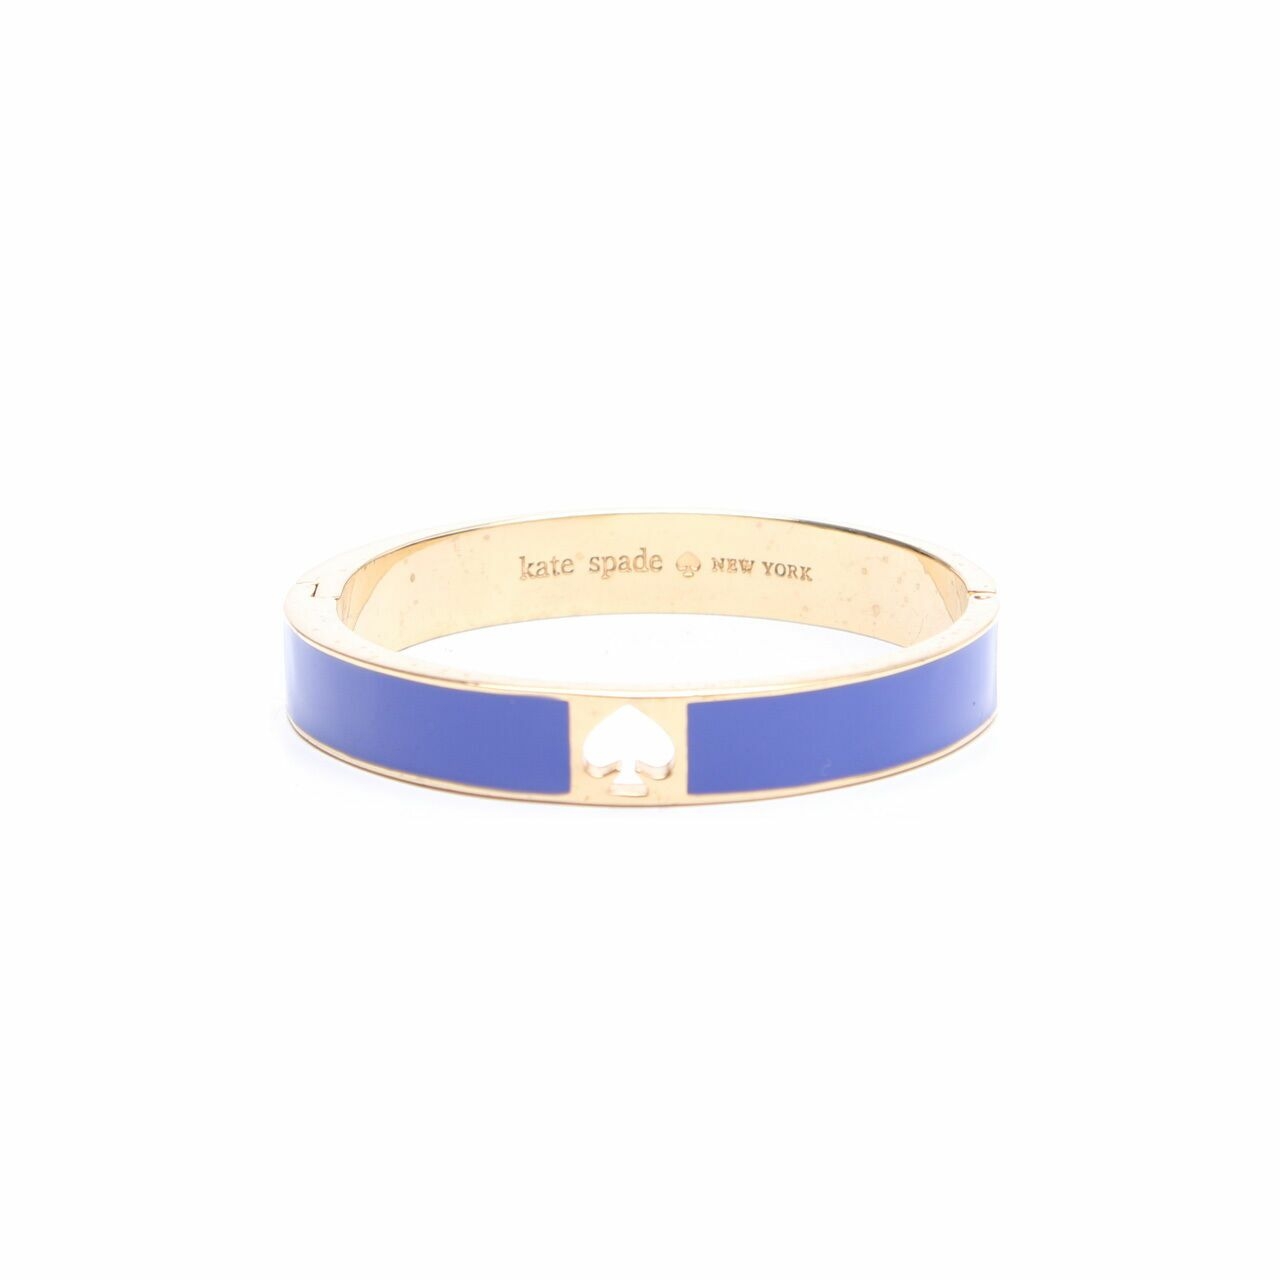 Kate Spade Blue & Gold Bracelet Jewelry